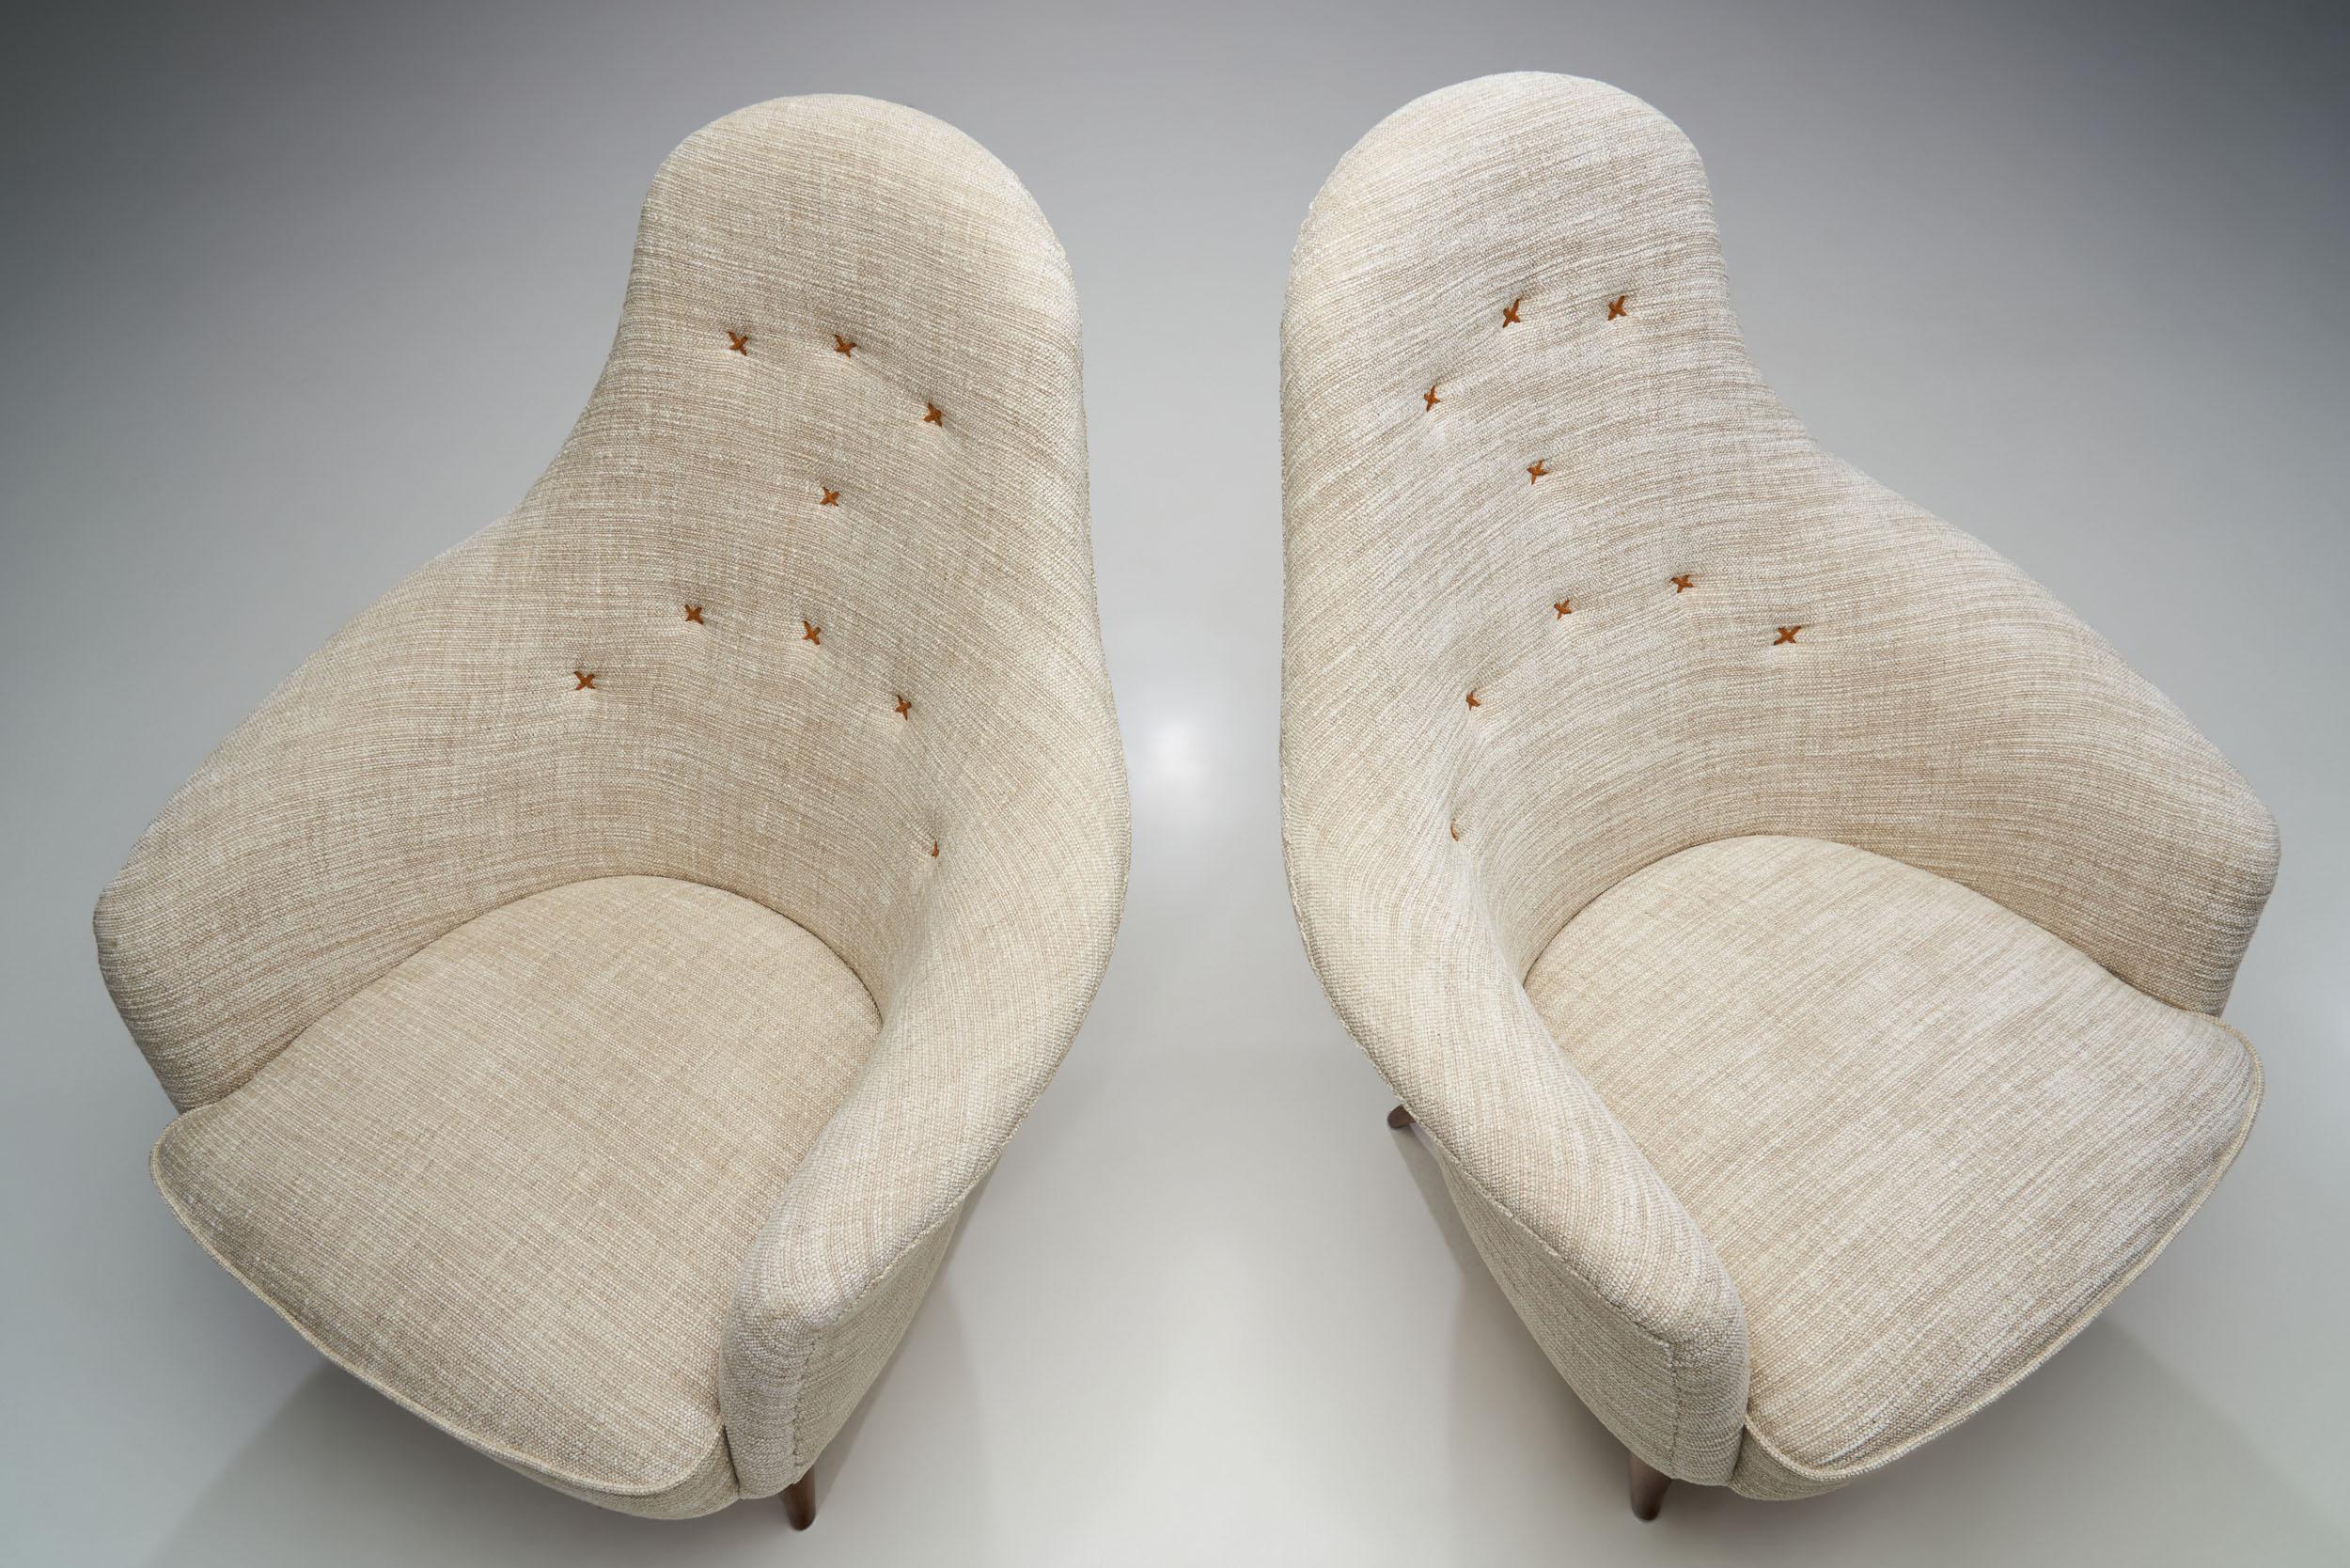 Fabric Kerstin Hörlin-Holmquist “Little Eva” Pair of Easy Chairs, Sweden, 1950s